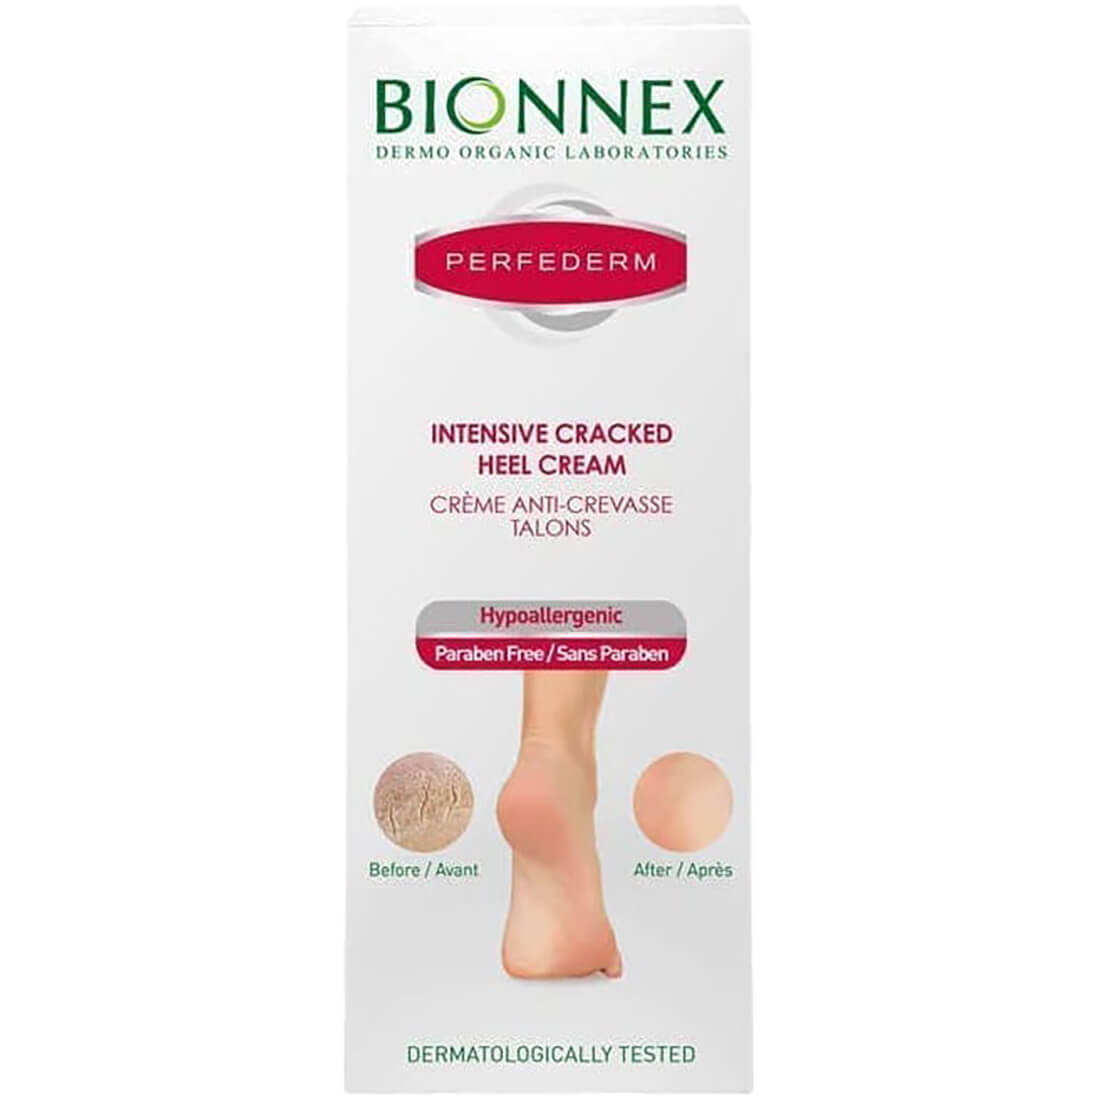 Bionnex Perfederm Intensive Cracked Heel Cream